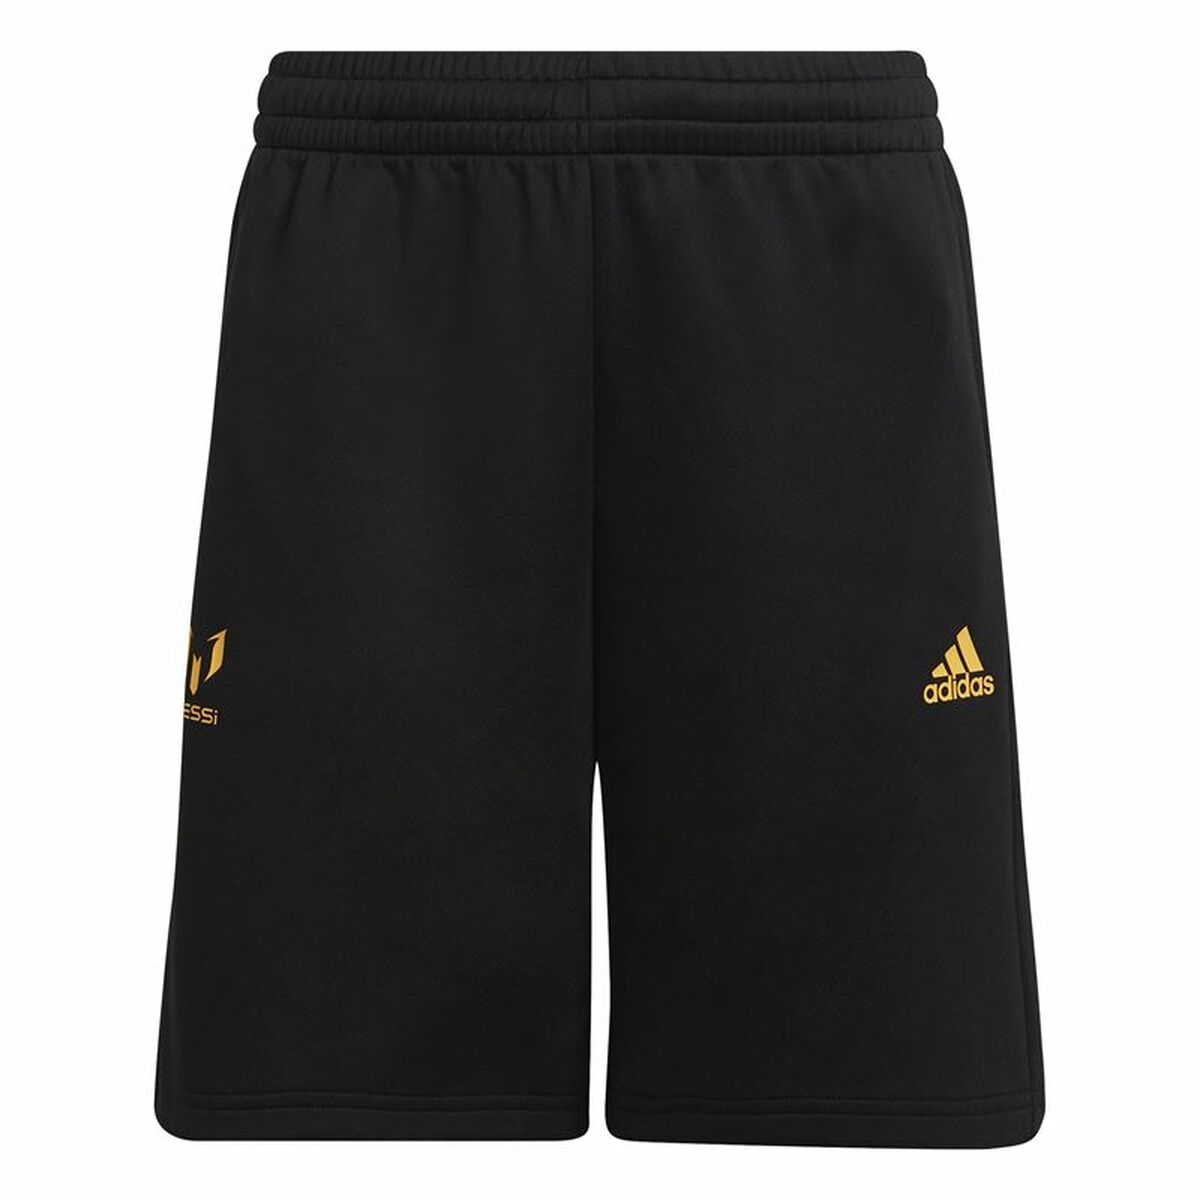 Pantalon de Trening pentru Copii Adidas Messi Negru - Mărime 7-8 Ani